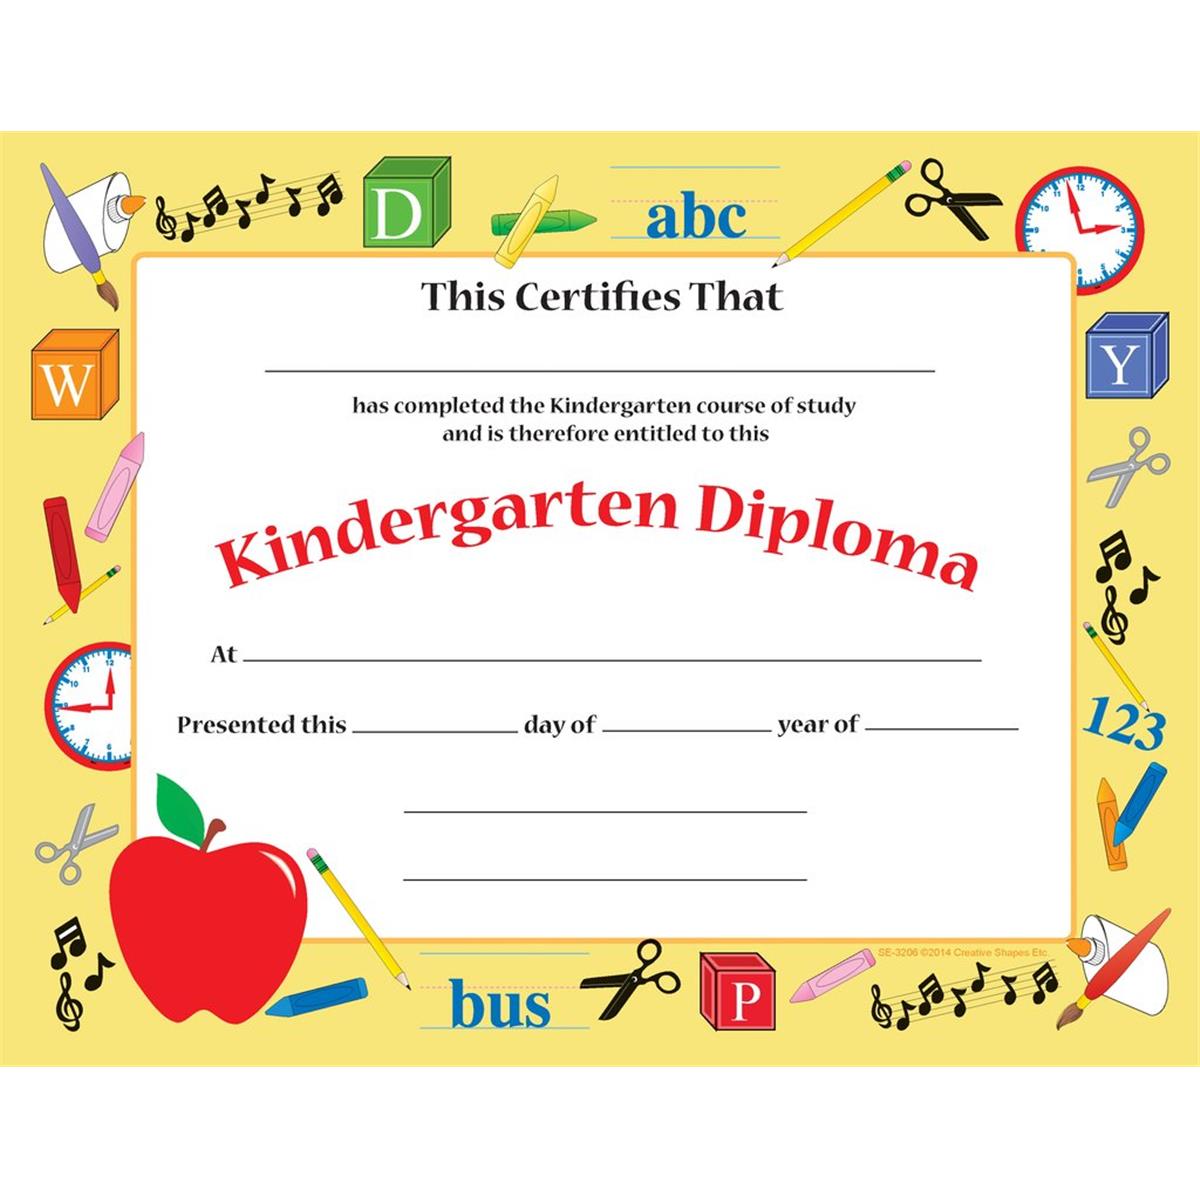 Se-3206 8.5 X 11 In. Kindergarten Diploma Certificate - 30 Sheets Per Pack